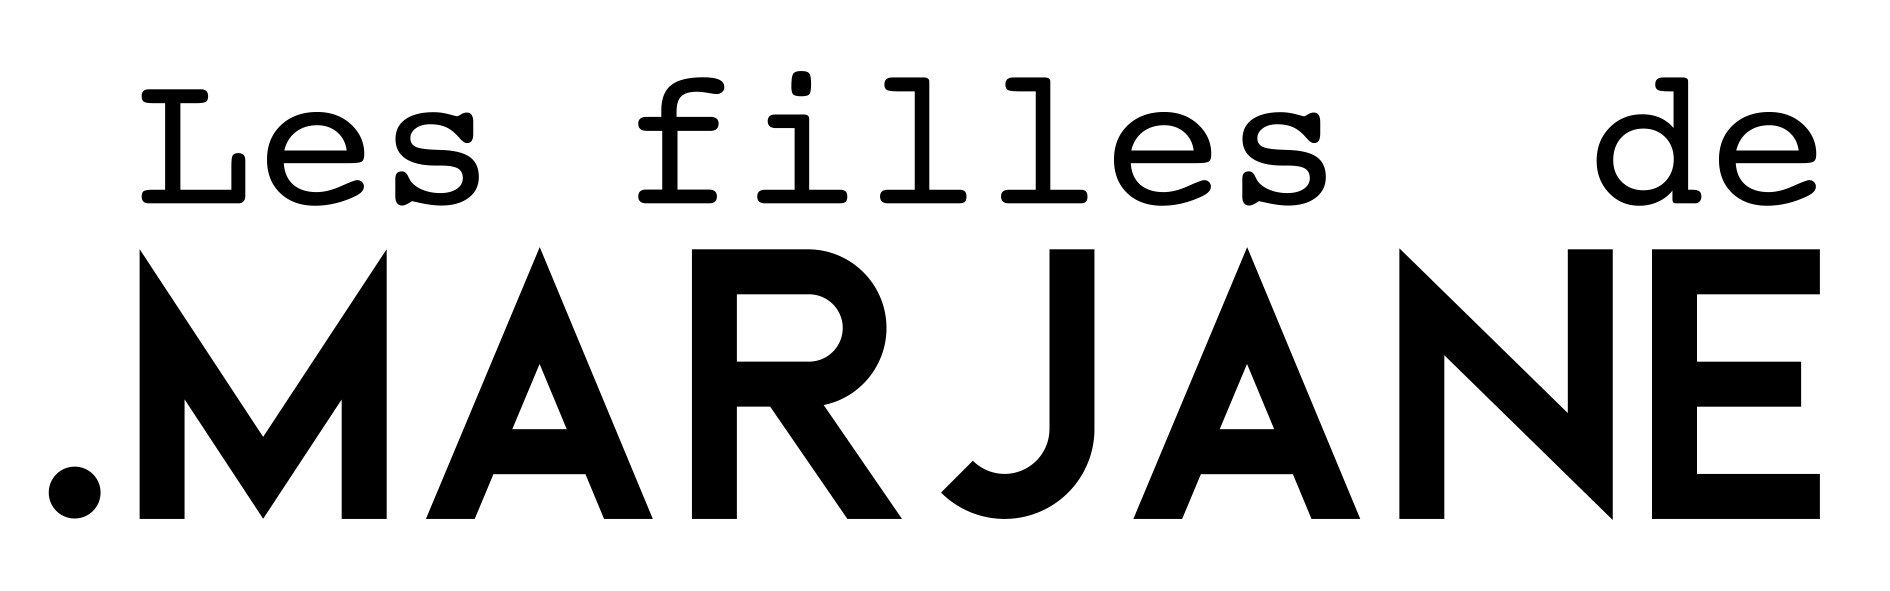 Logo lesfillesdemarjane marque objet lifestyle